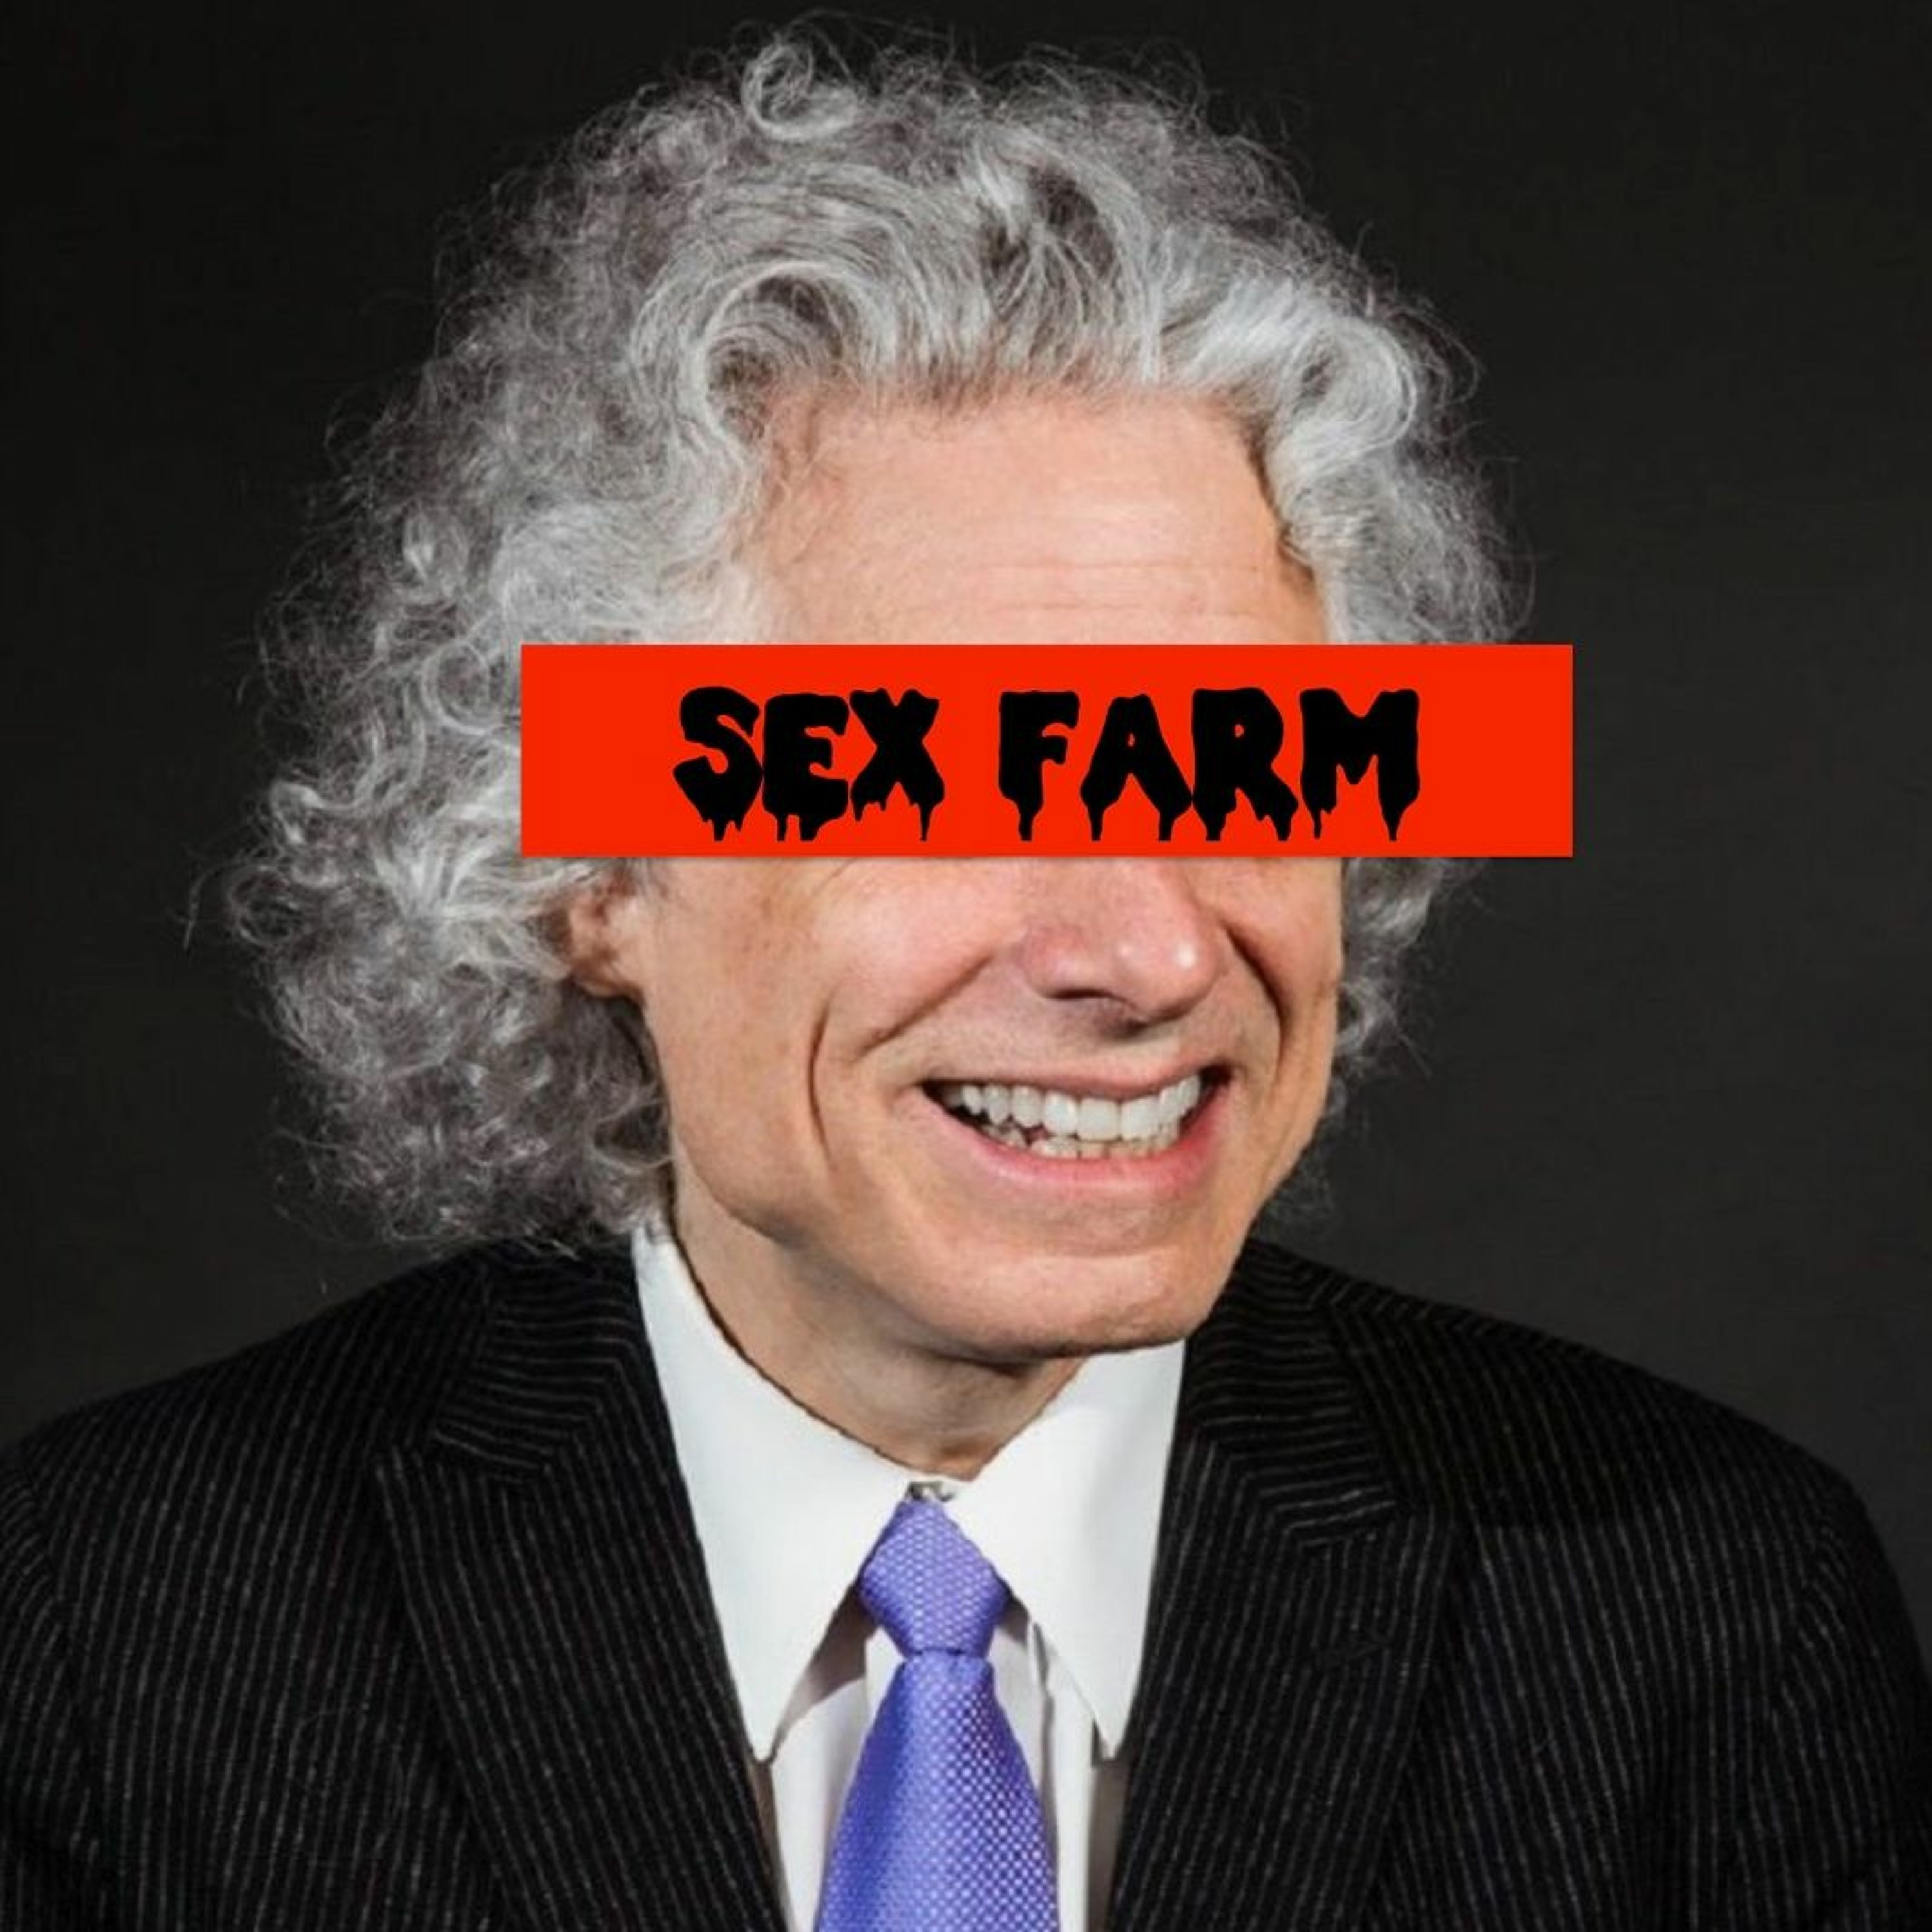 Episode 3: Sex Farm